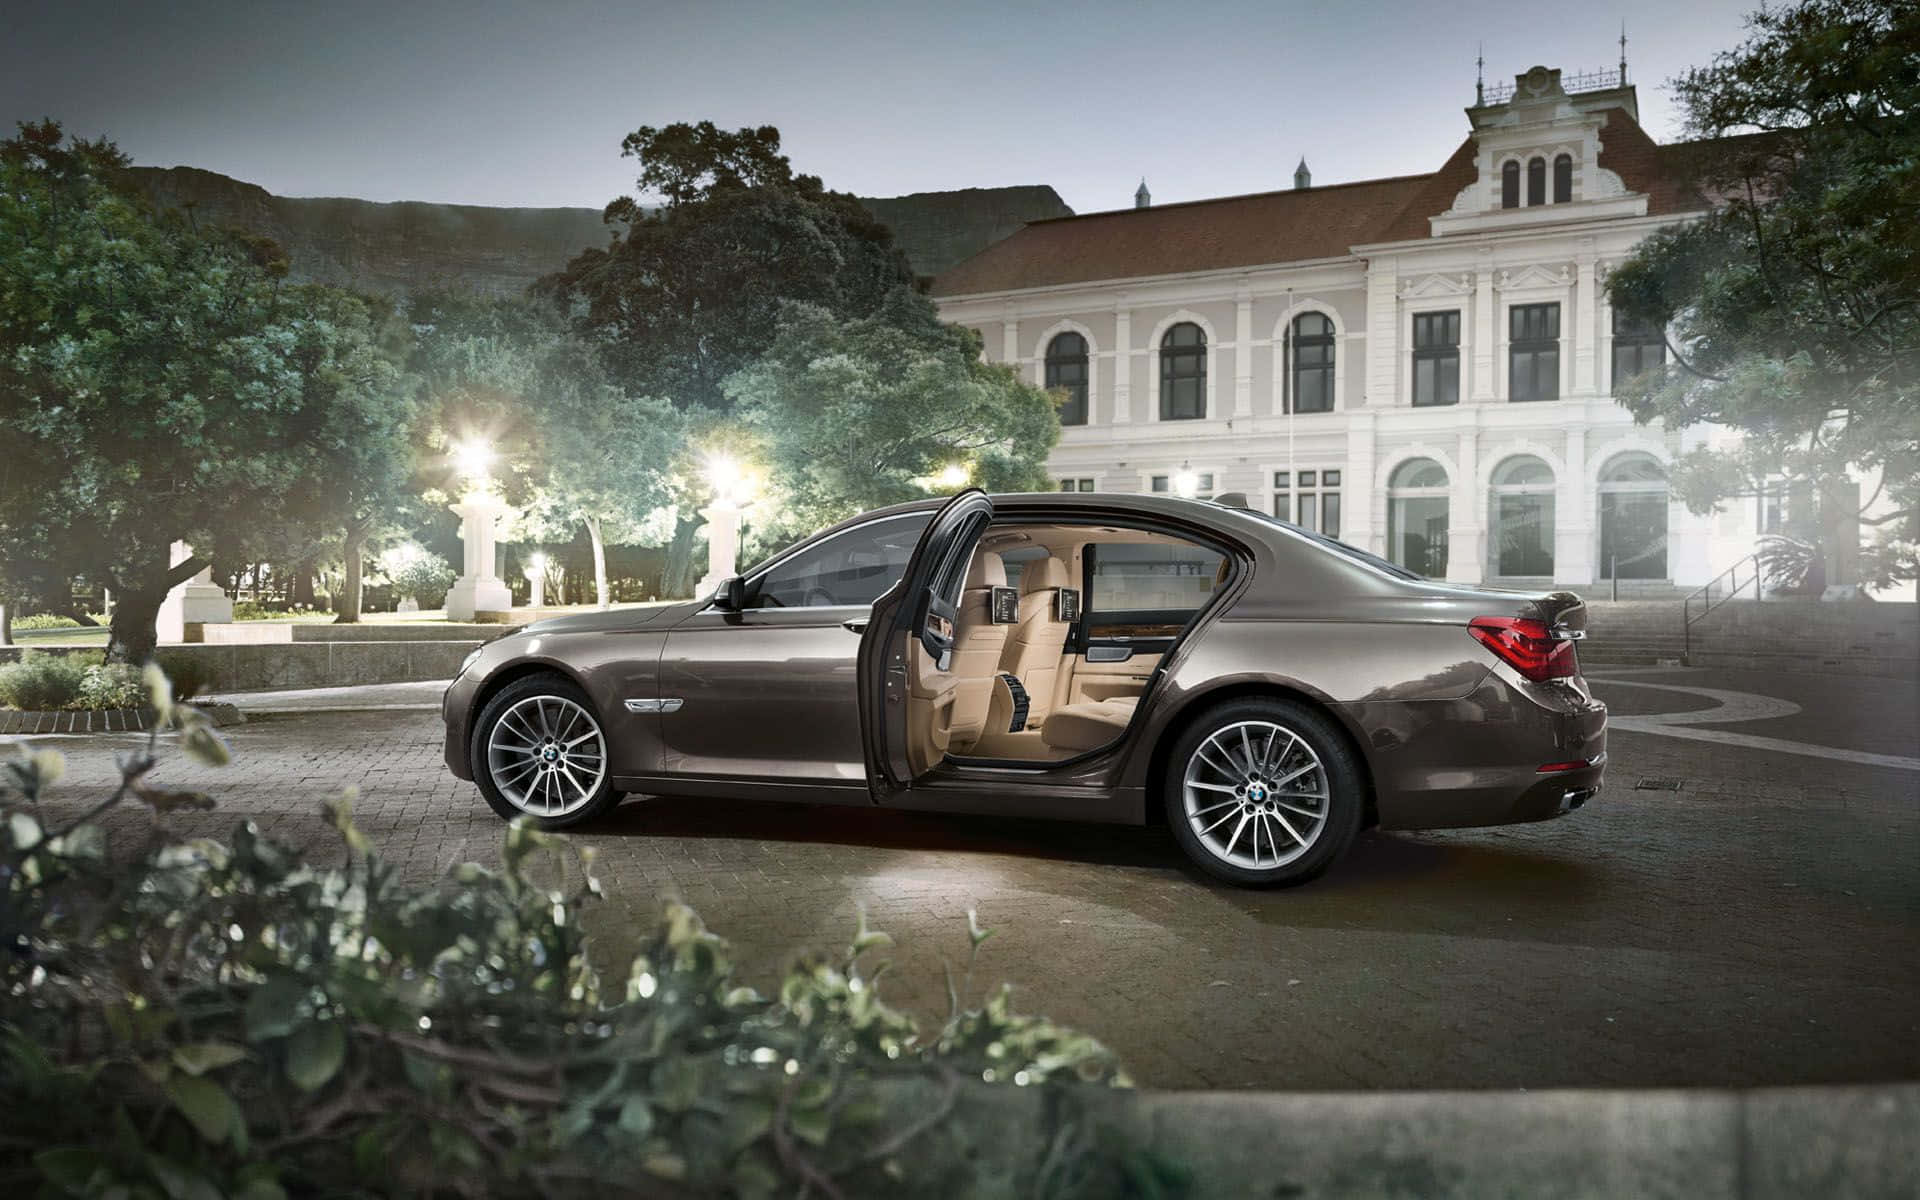 Exquisite BMW 7 Series Luxury Sedan in Natural Setting Wallpaper